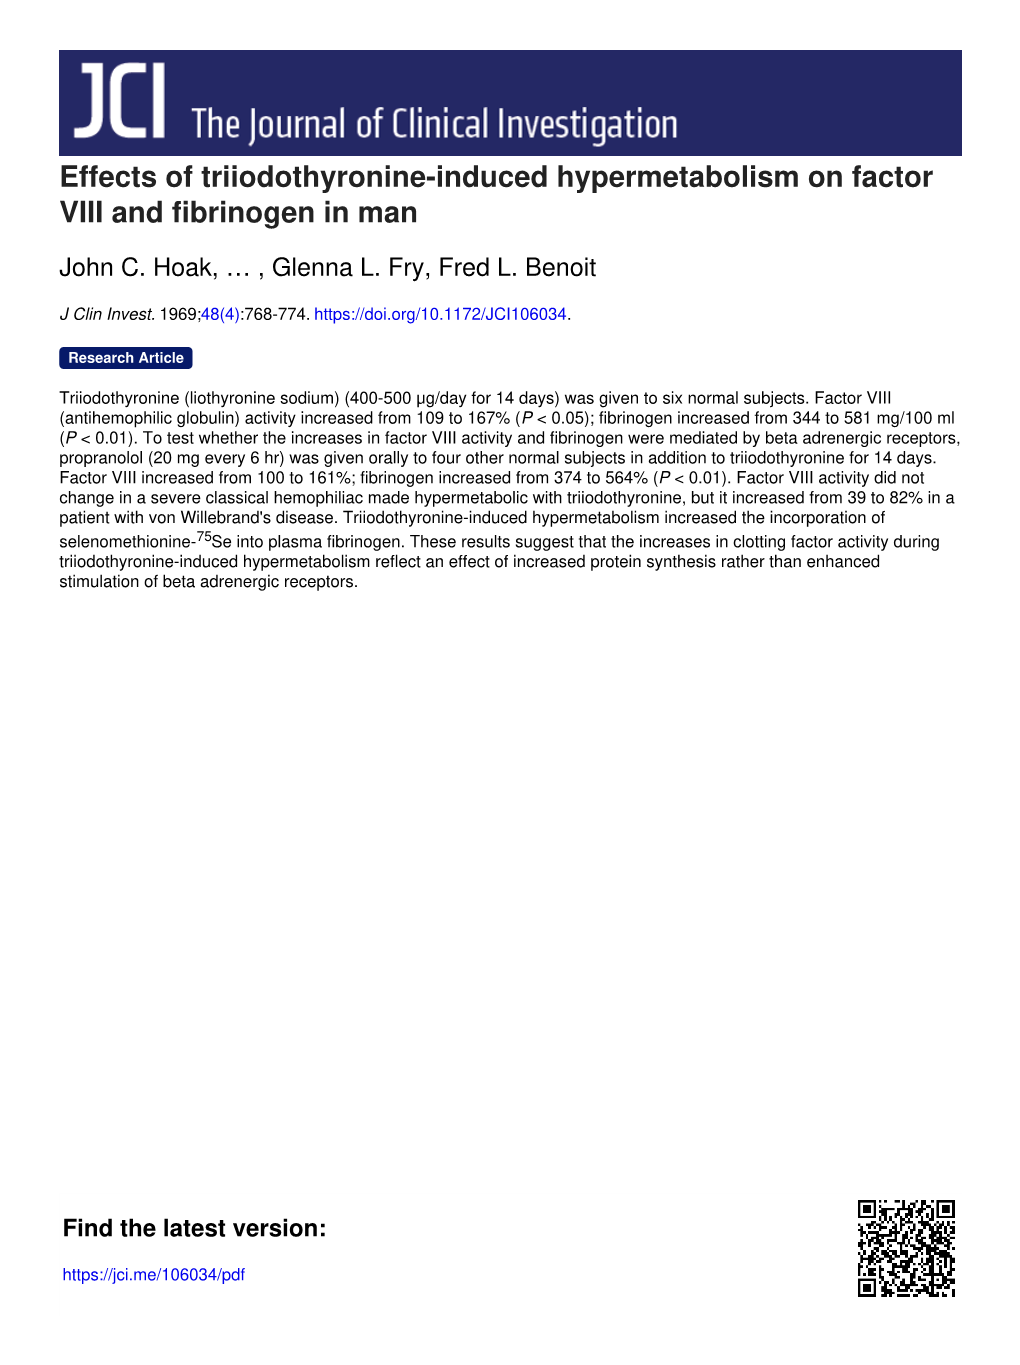 Effects of Triiodothyronine-Induced Hypermetabolism on Factor VIII and Fibrinogen in Man